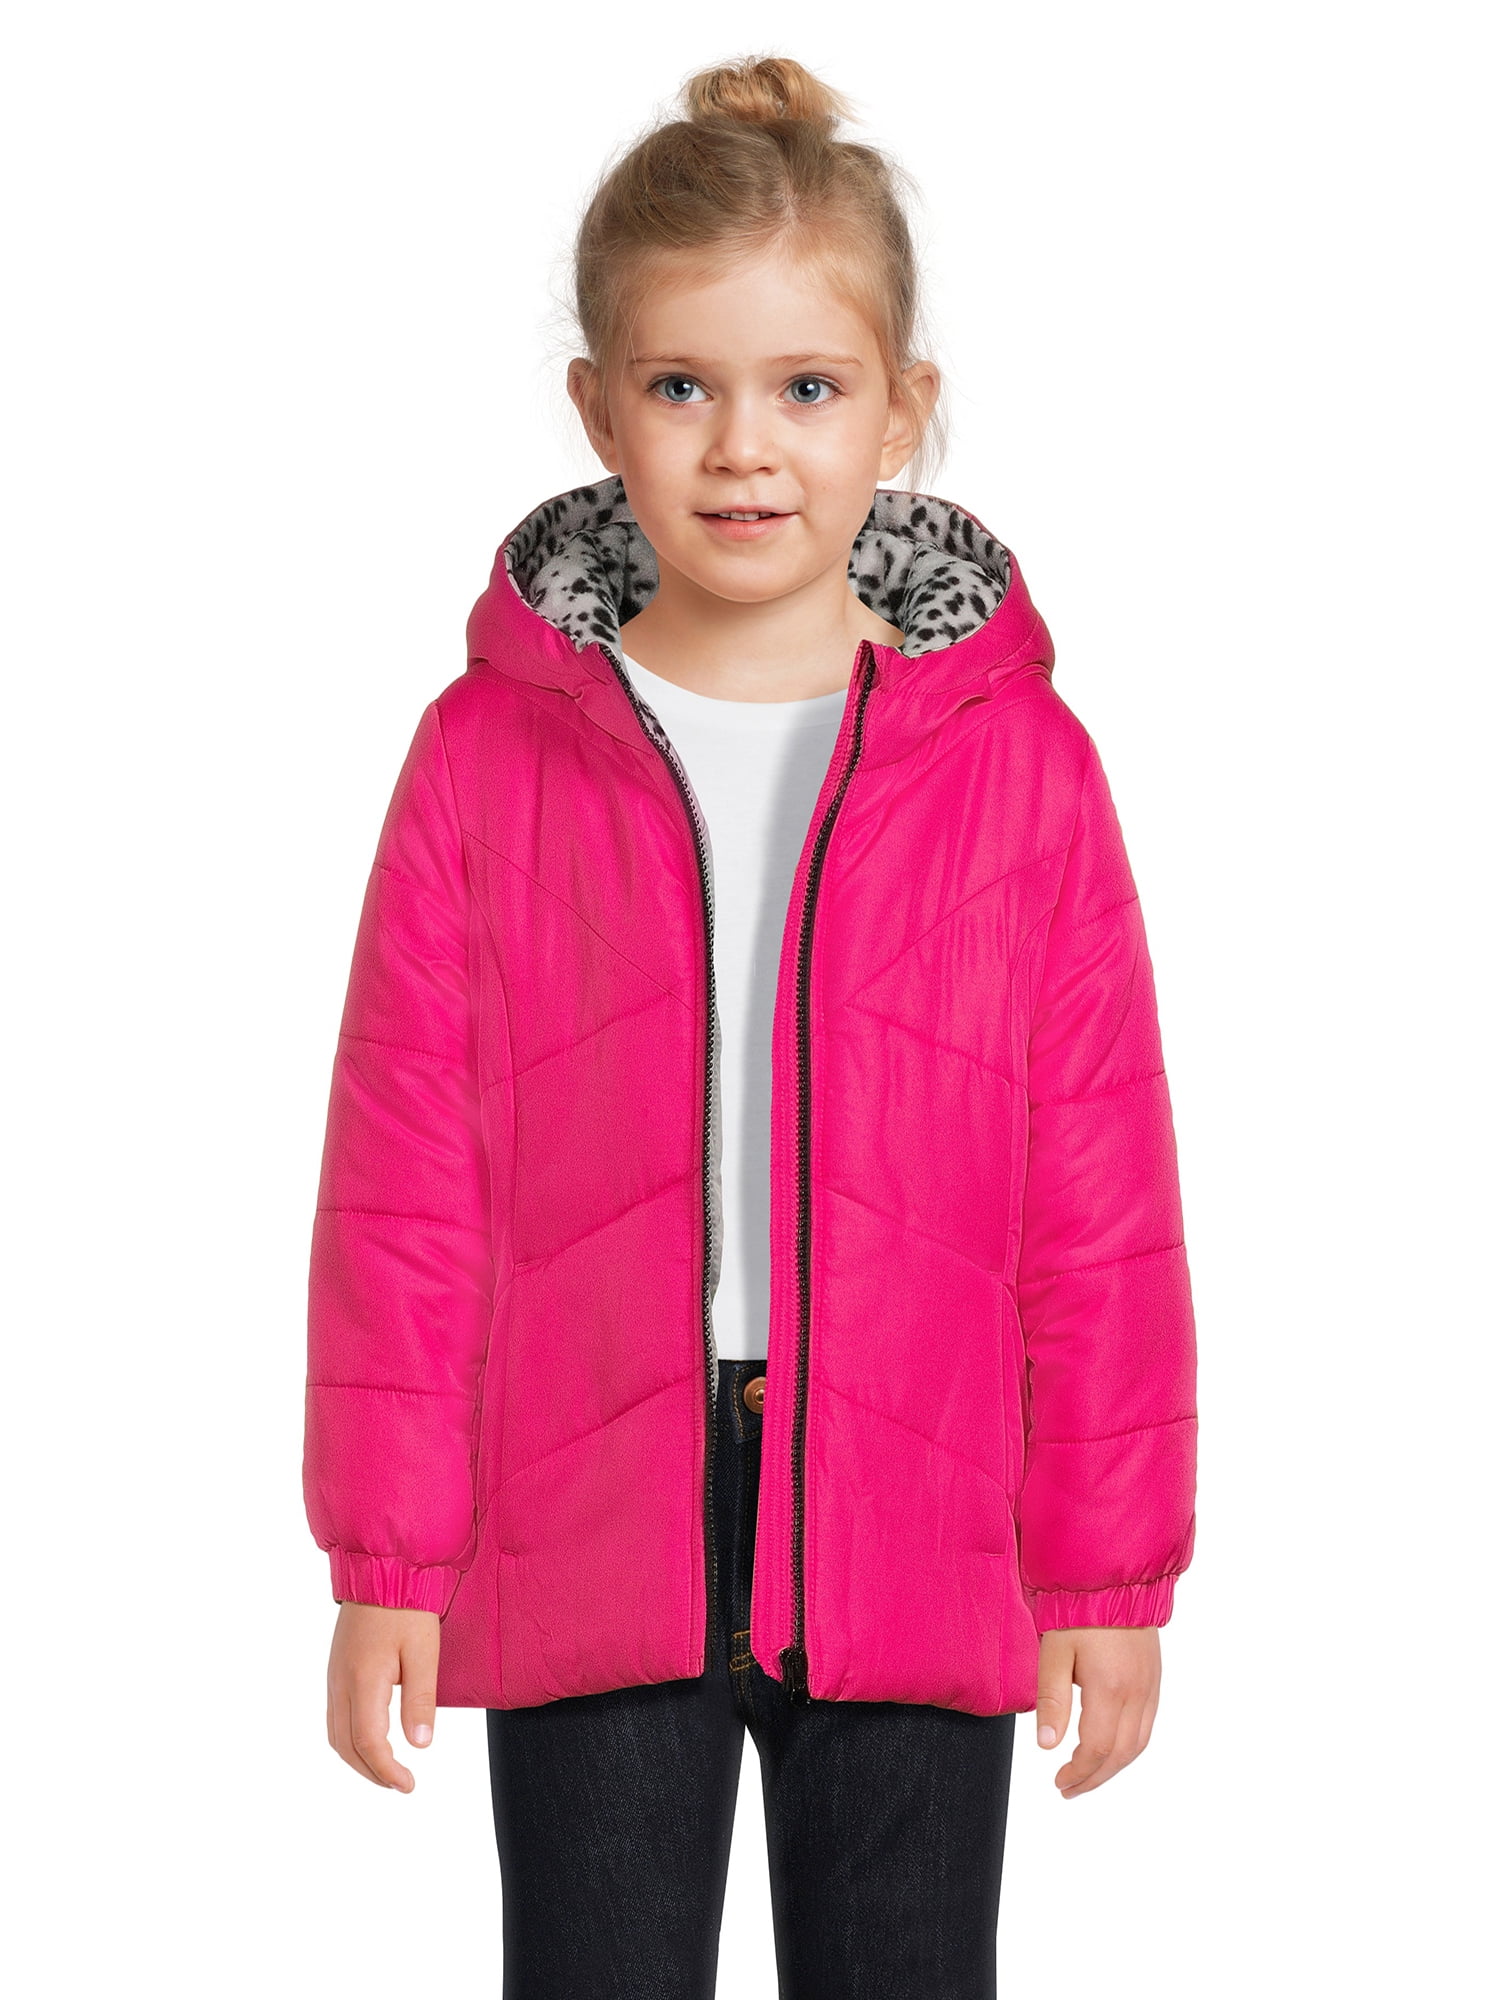 Weather Tamer Girls Long Sleeve Hooded Winter Puffer Coat, Sizes 4-16 ...